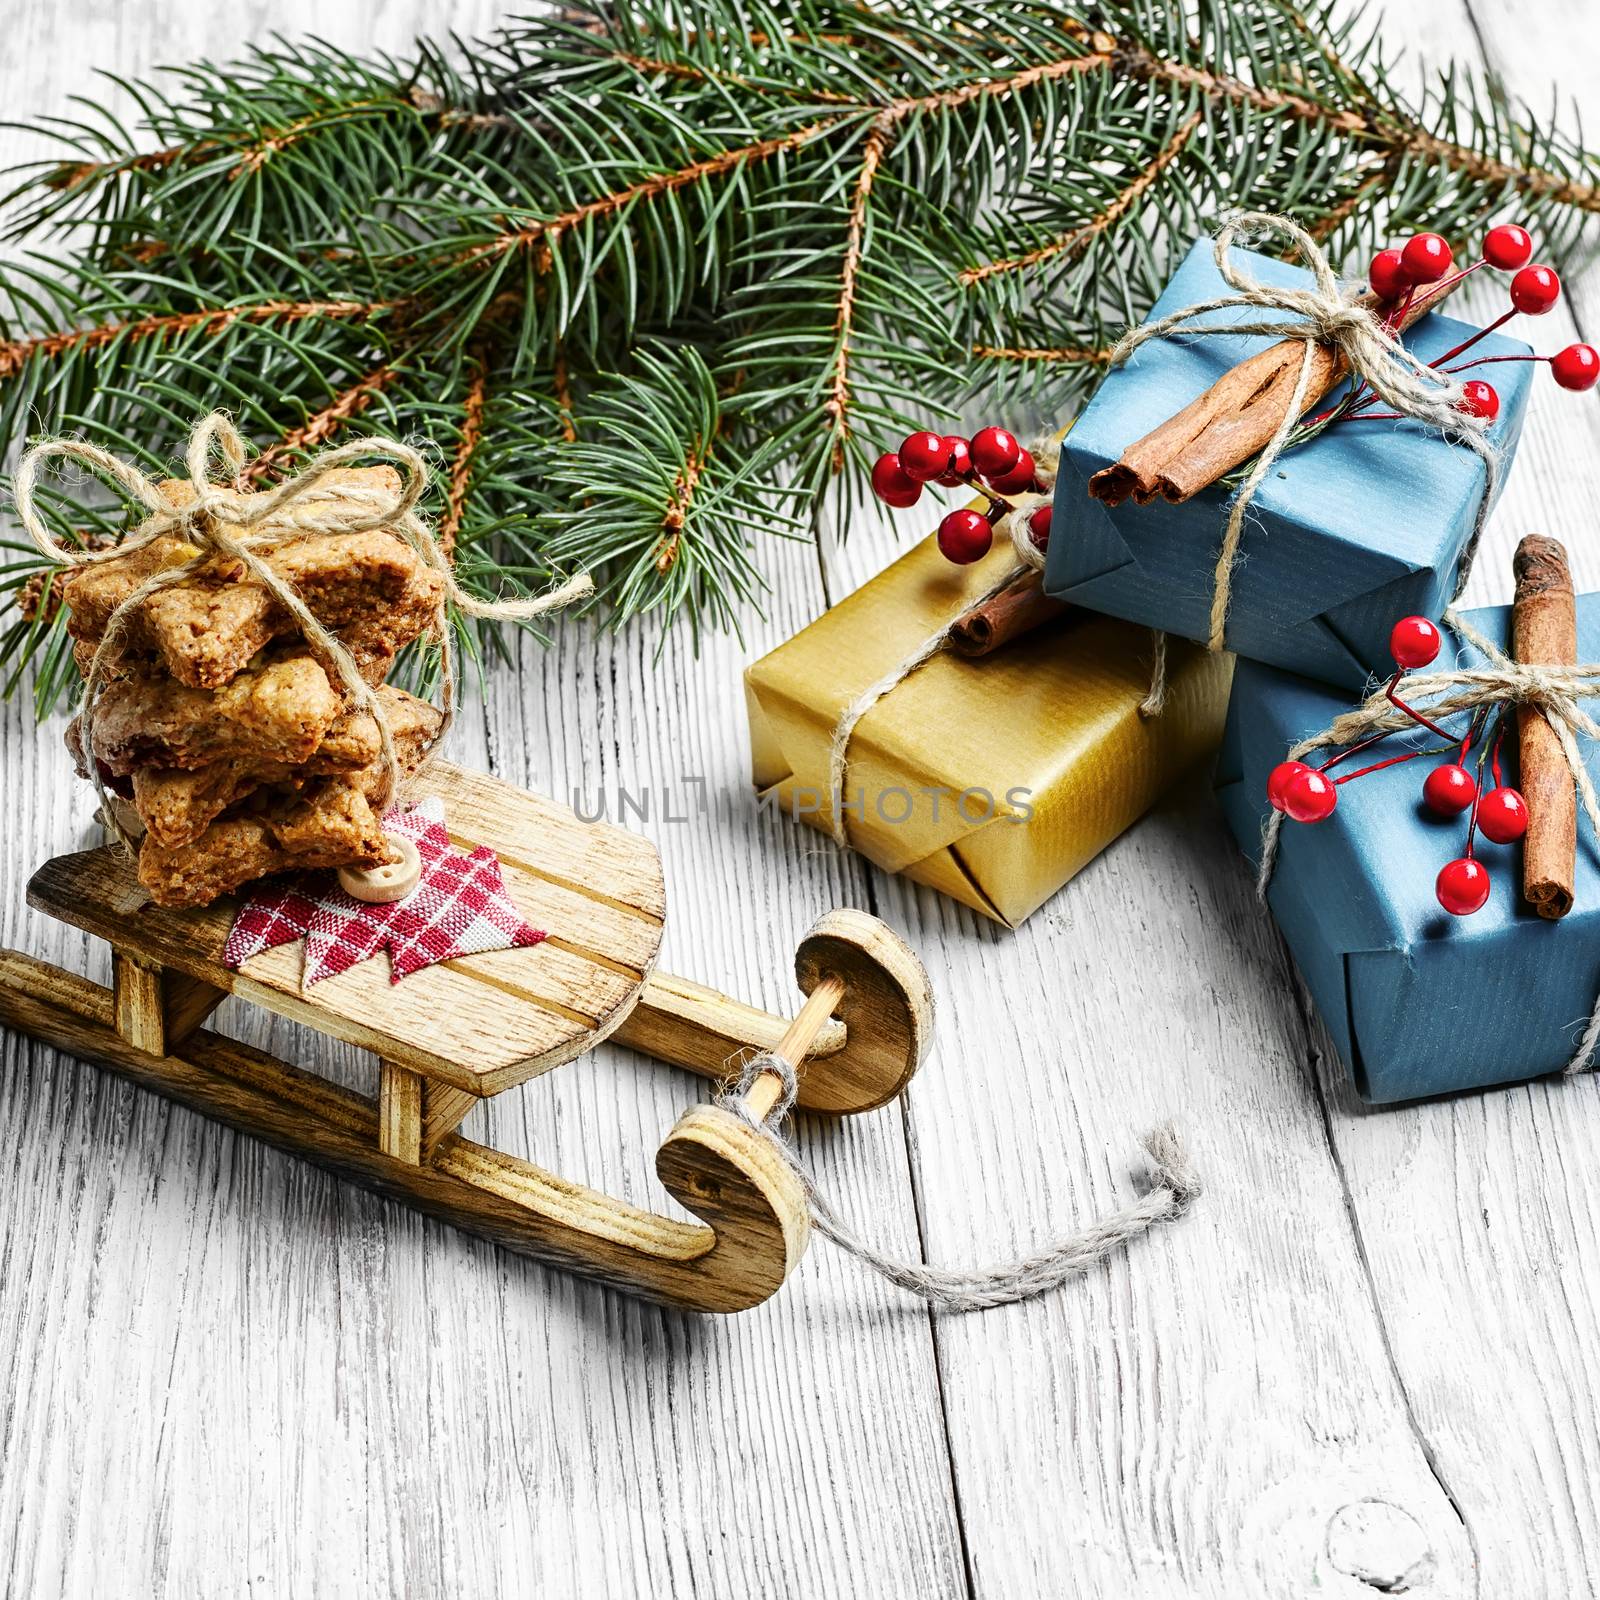 Santa's sleigh and gift. Christmas card by LMykola